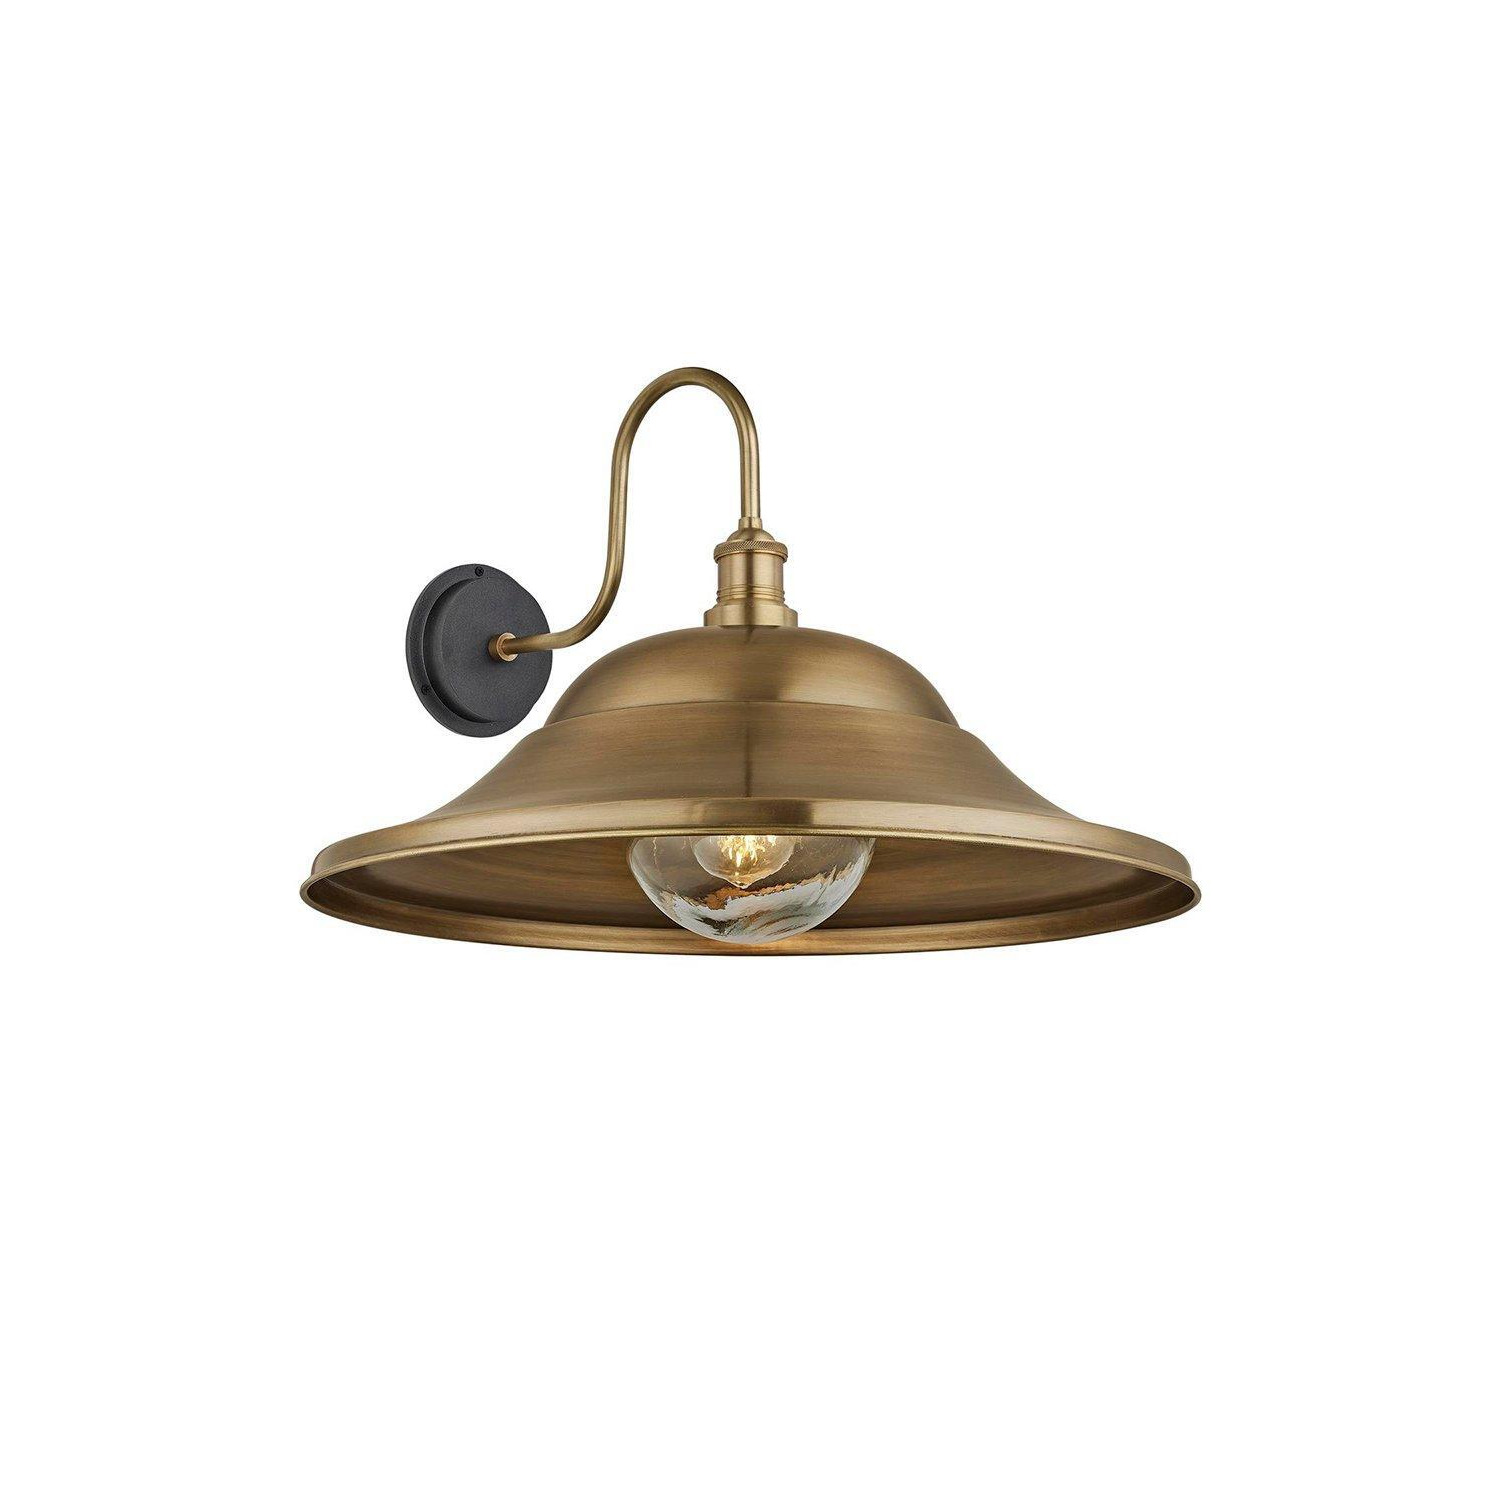 Swan Neck Outdoor & Bathroom Giant Hat Wall Light, 21 Inch, Brass, Brass Holder, Globe Glass - image 1